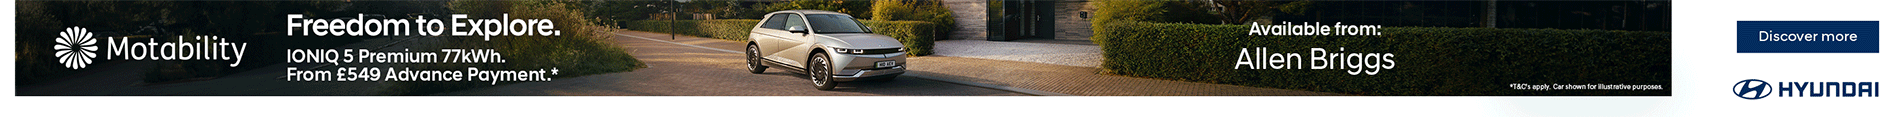 Hyundai Motability Web Banner